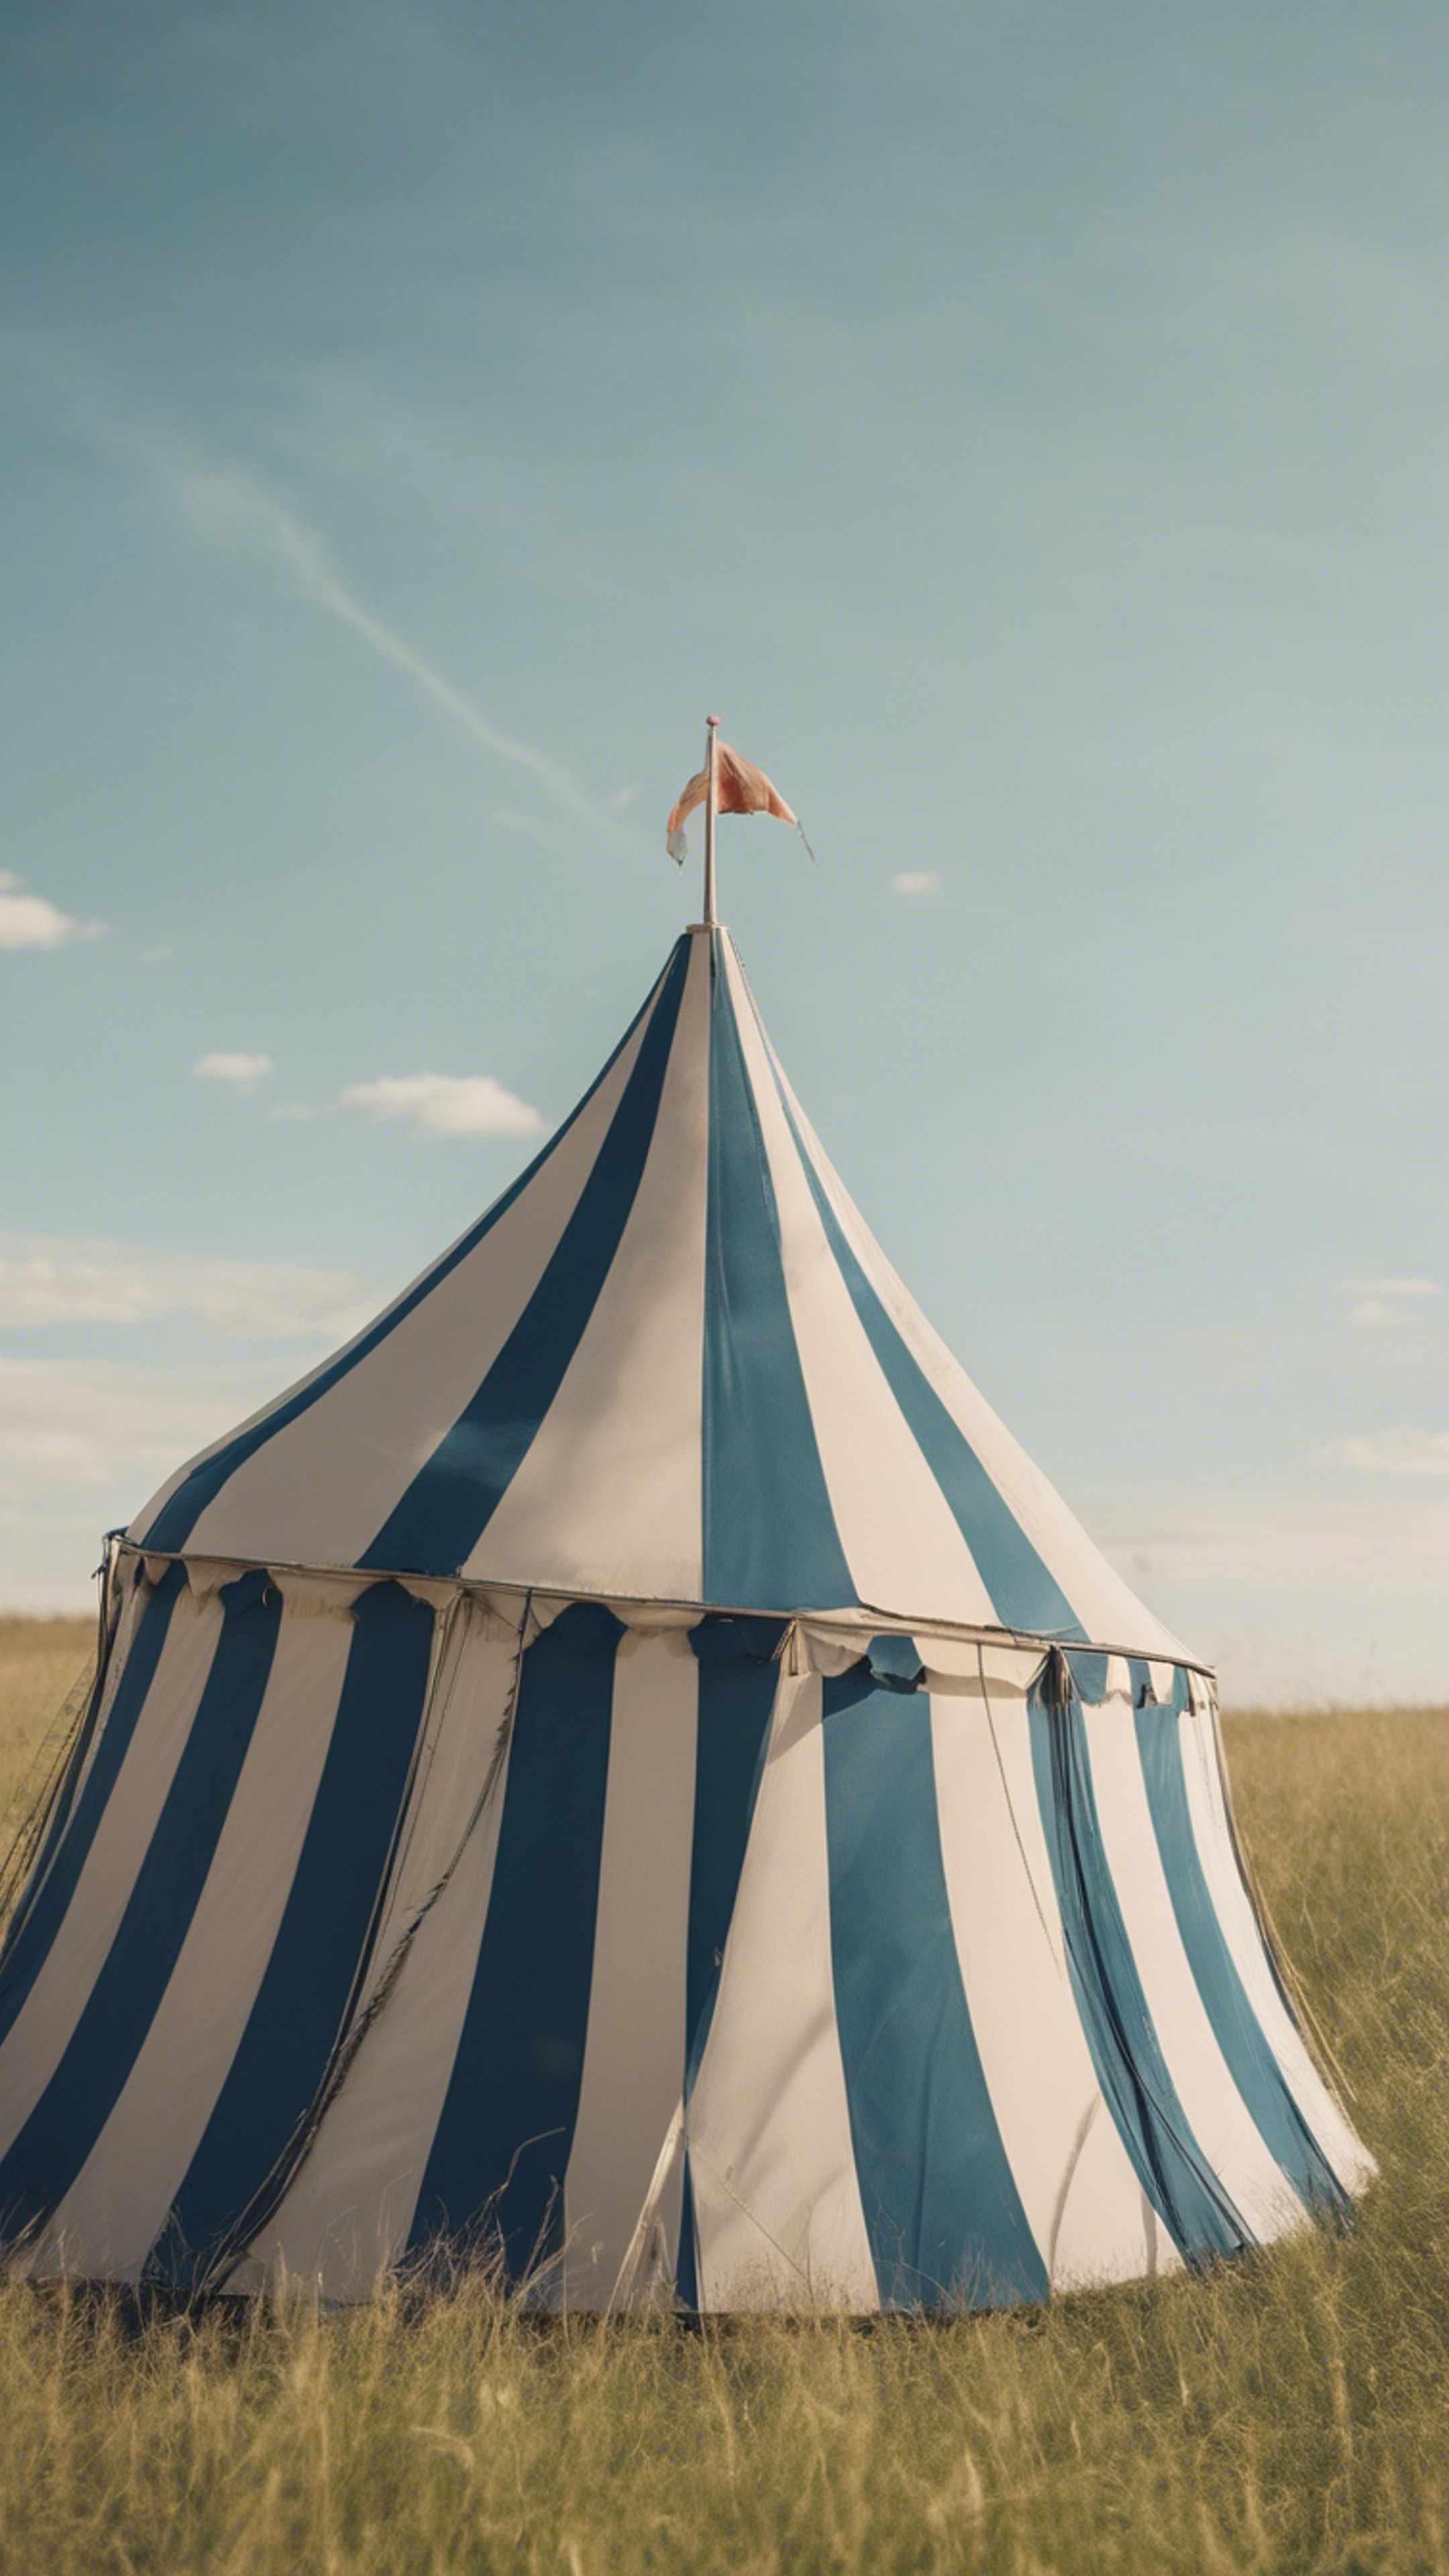 A vintage striped circus tent in a grassy field with a blue sky overhead. Дэлгэцийн зураг[07d58b74cbfe41aa8350]